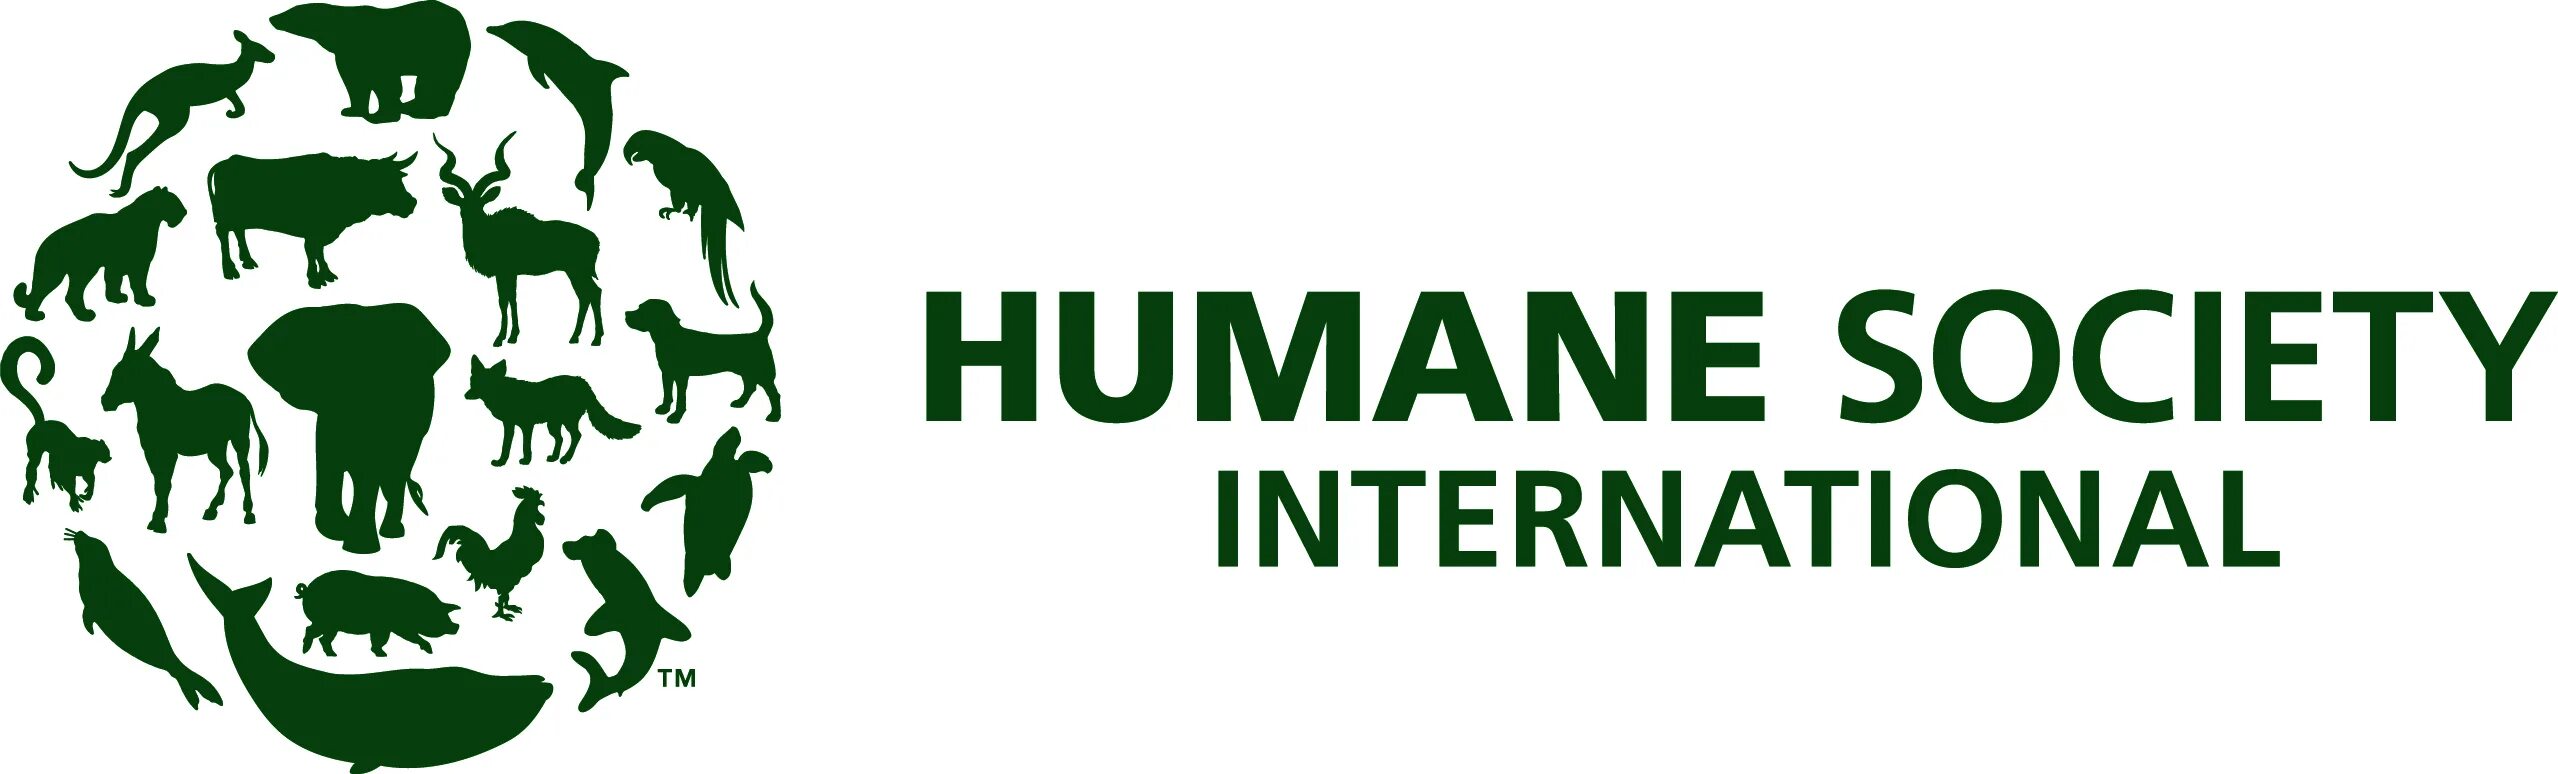 Human society. Humane Society International. Humane Society International Australia. Protection International организация. Humane Society International агенты.